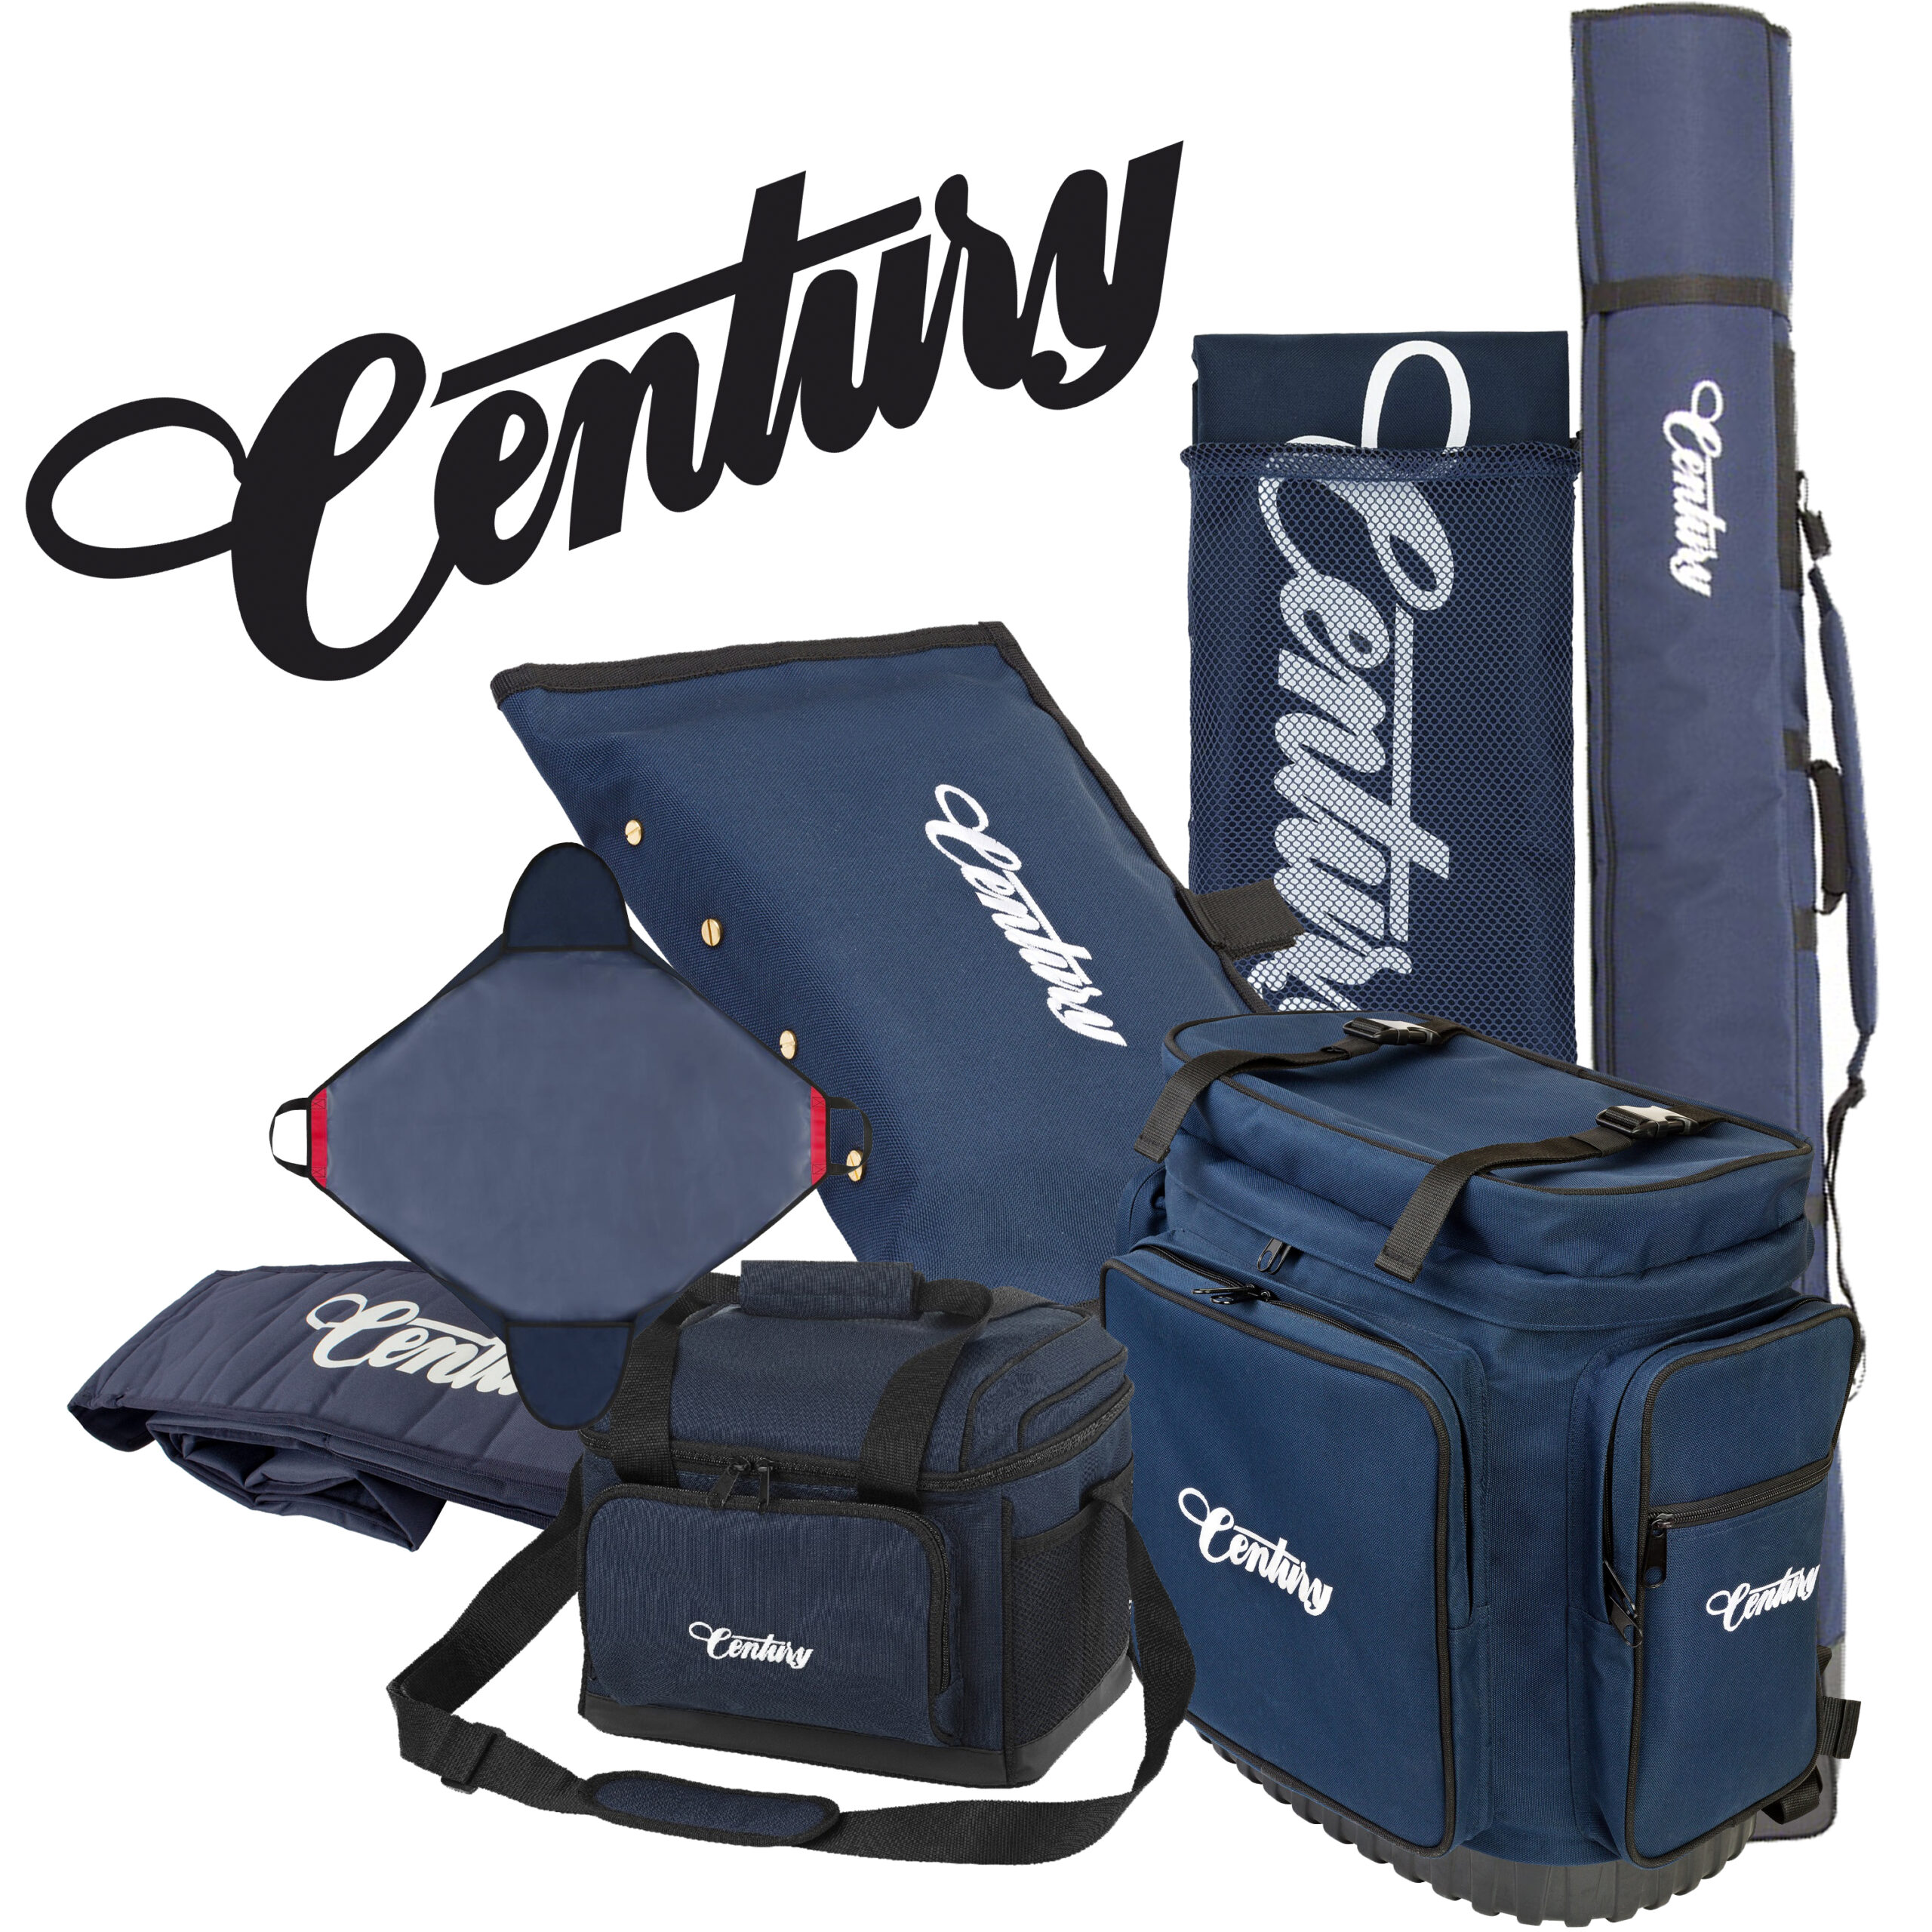 Century Cool Bag - Veals Mail Order